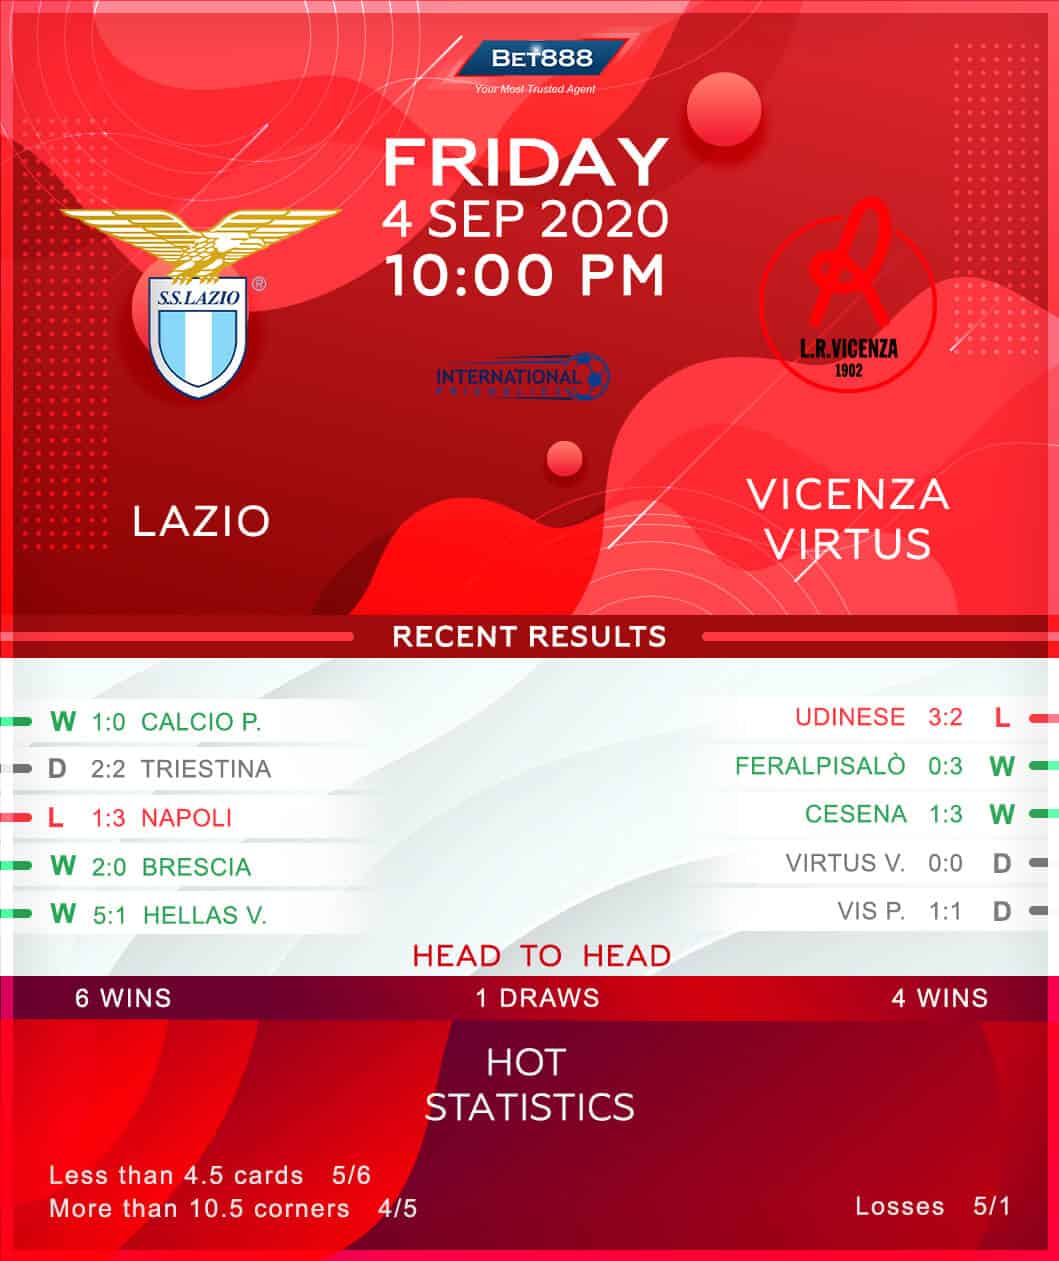 Lazio vs Vicenza Virtus﻿ 04/09/20